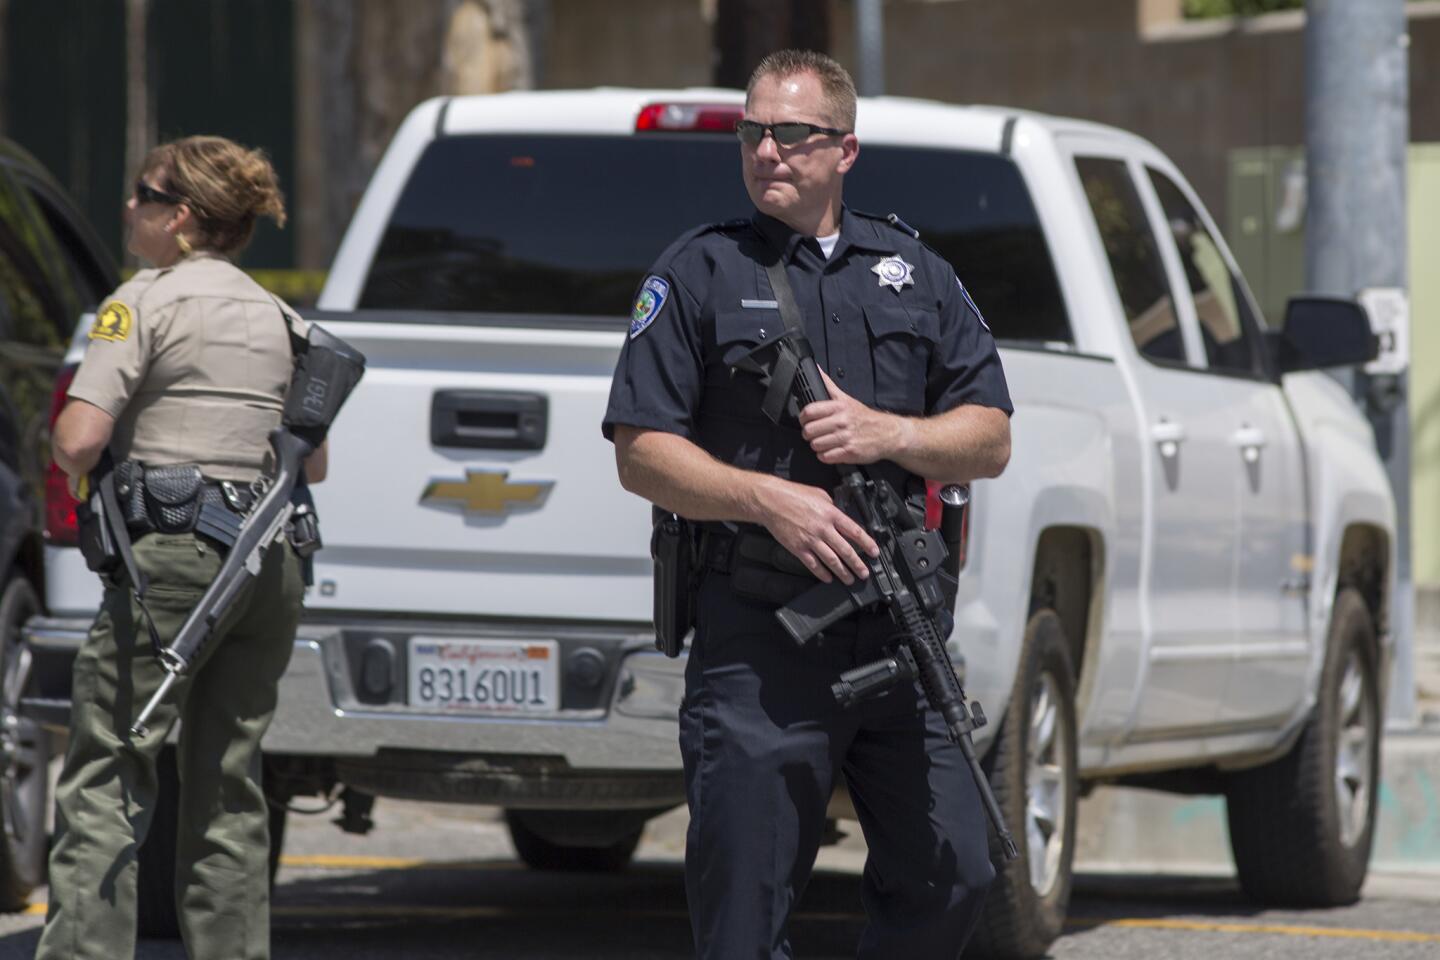 San Bernardino school shooting